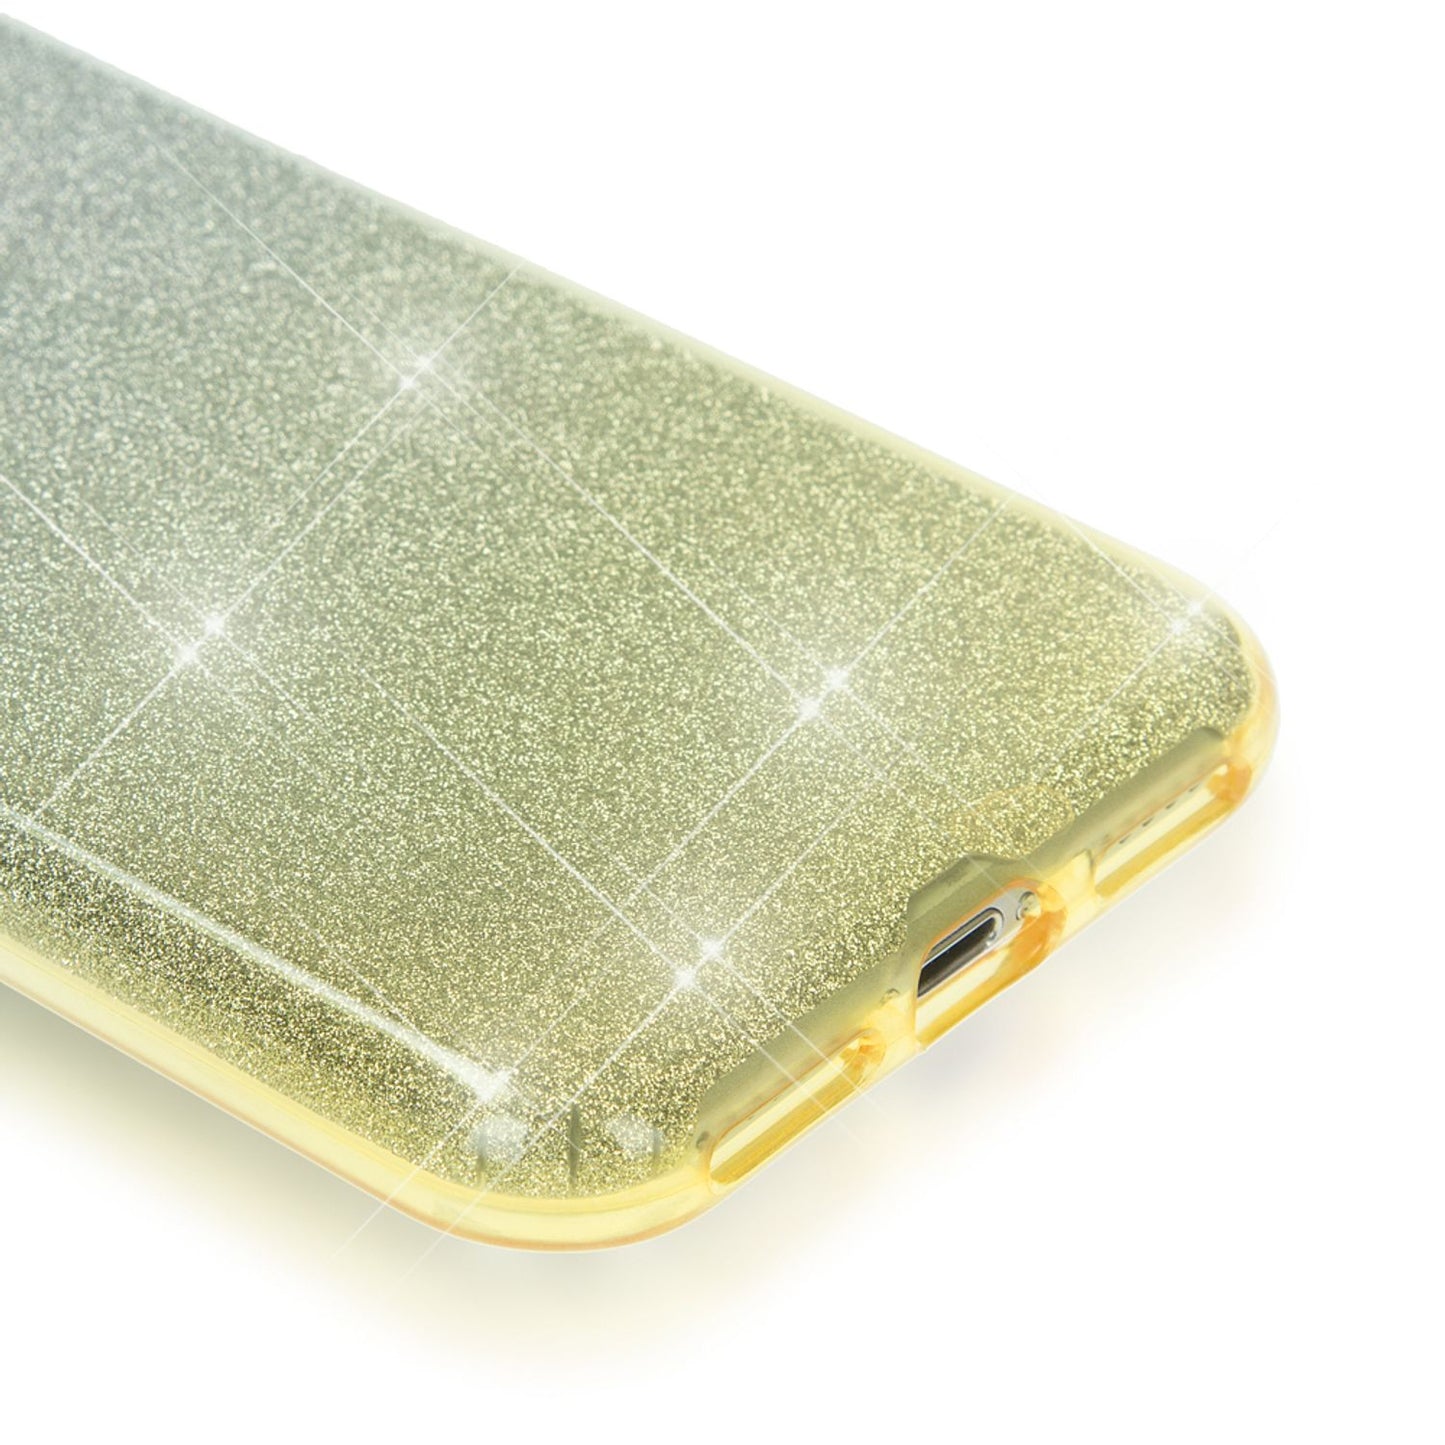 iPhone 7 Hülle Handyhülle von NALIA, Dünnes Glitzer Silikon-Case, Bling Cover